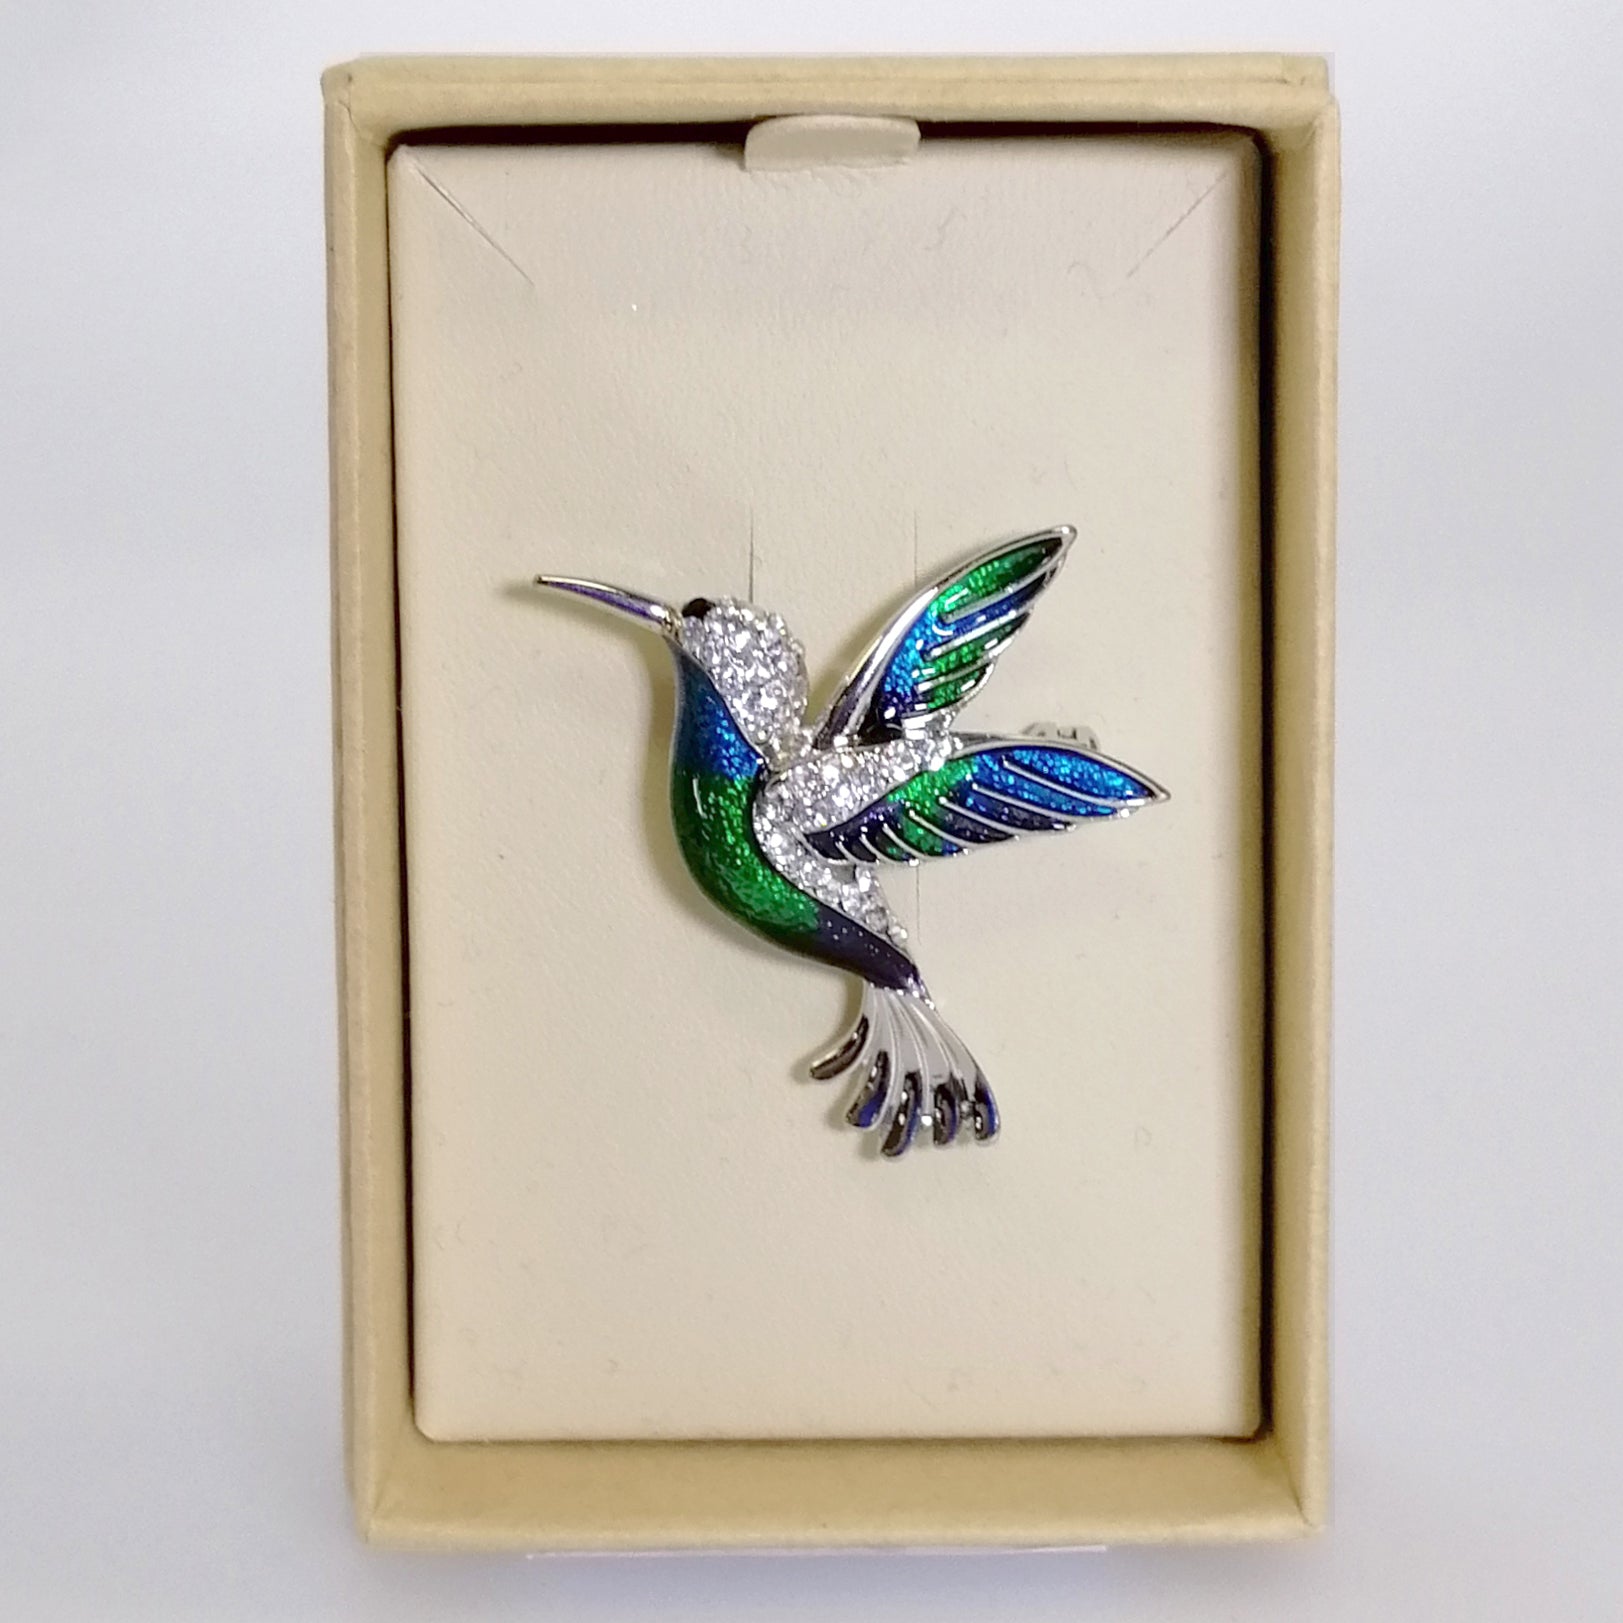 Kiwicraft - Blue & Green Hummingbird Brooch